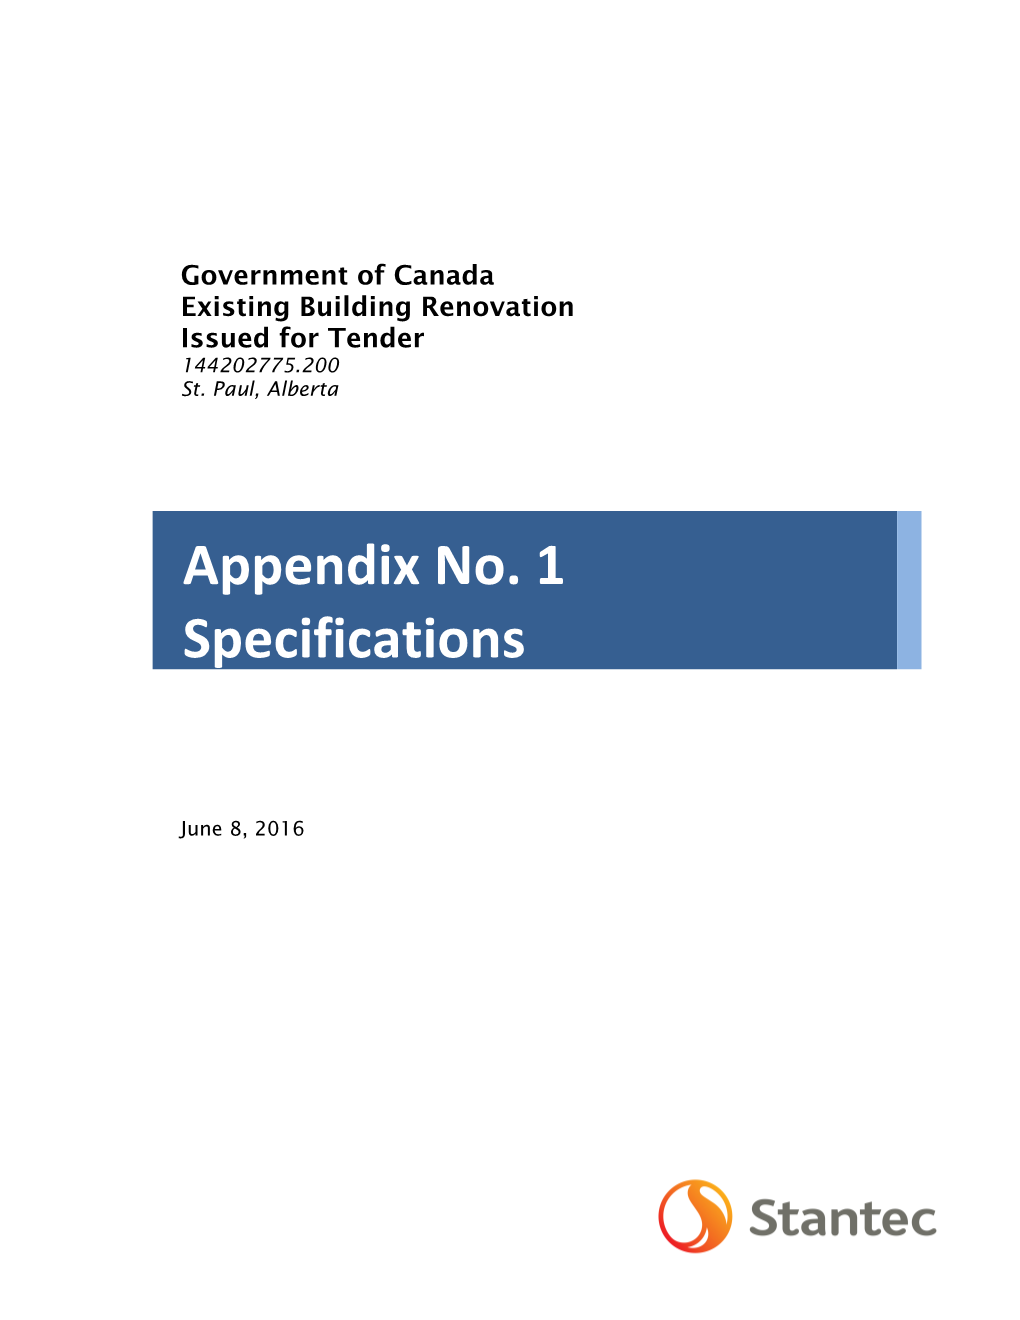 Appendix No. 1 Specifications